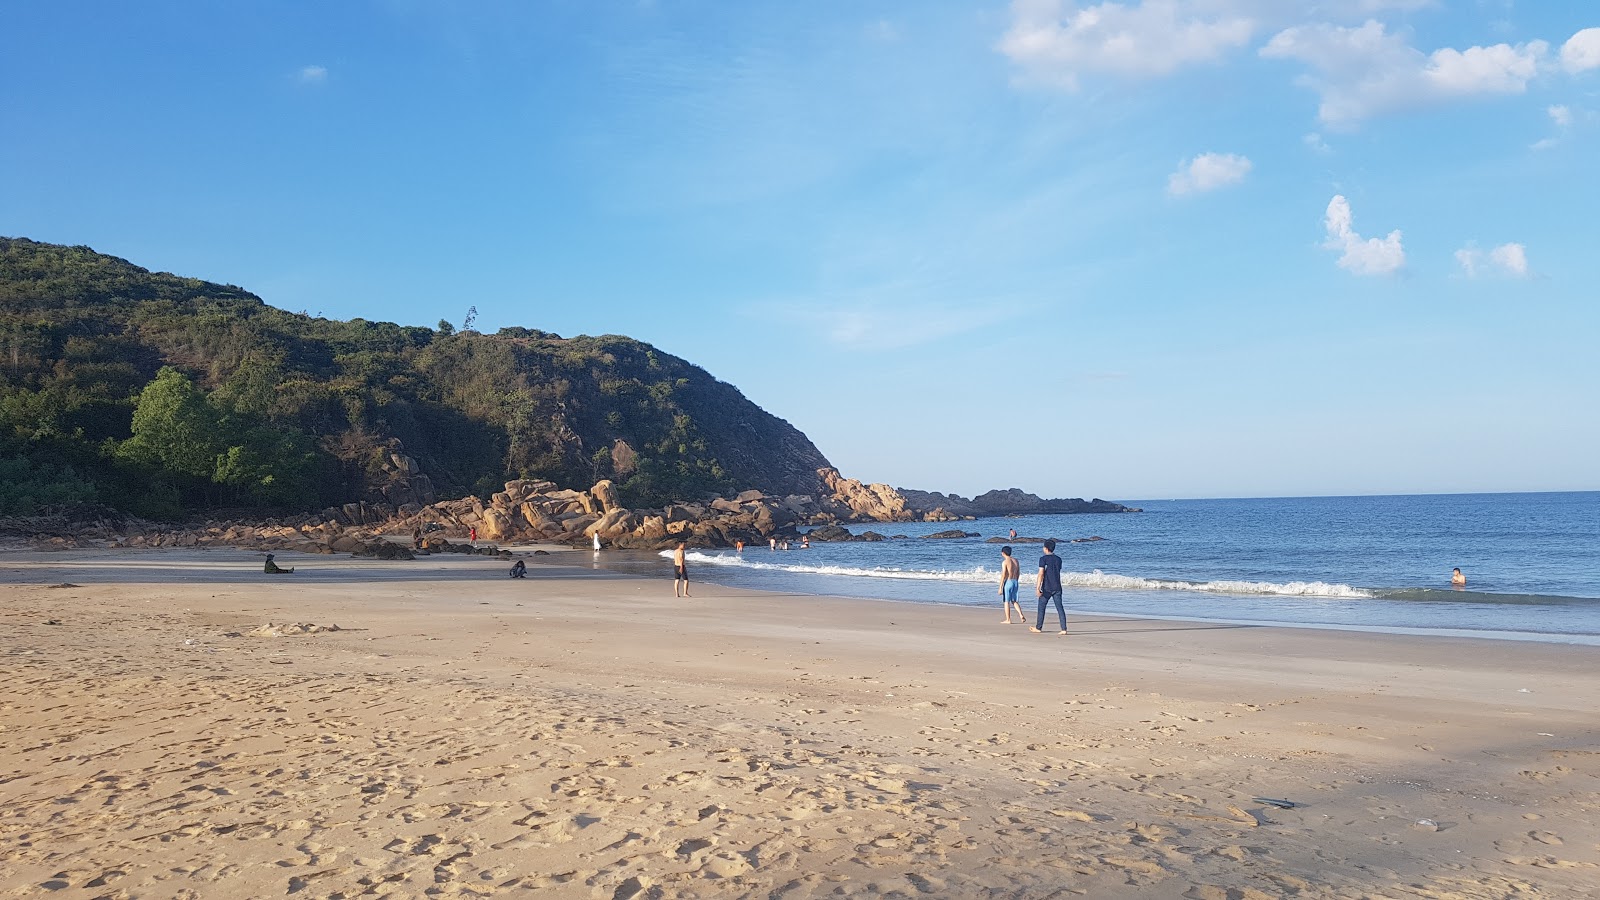 Fotografie cu Hoa Thanh Beach - locul popular printre cunoscătorii de relaxare